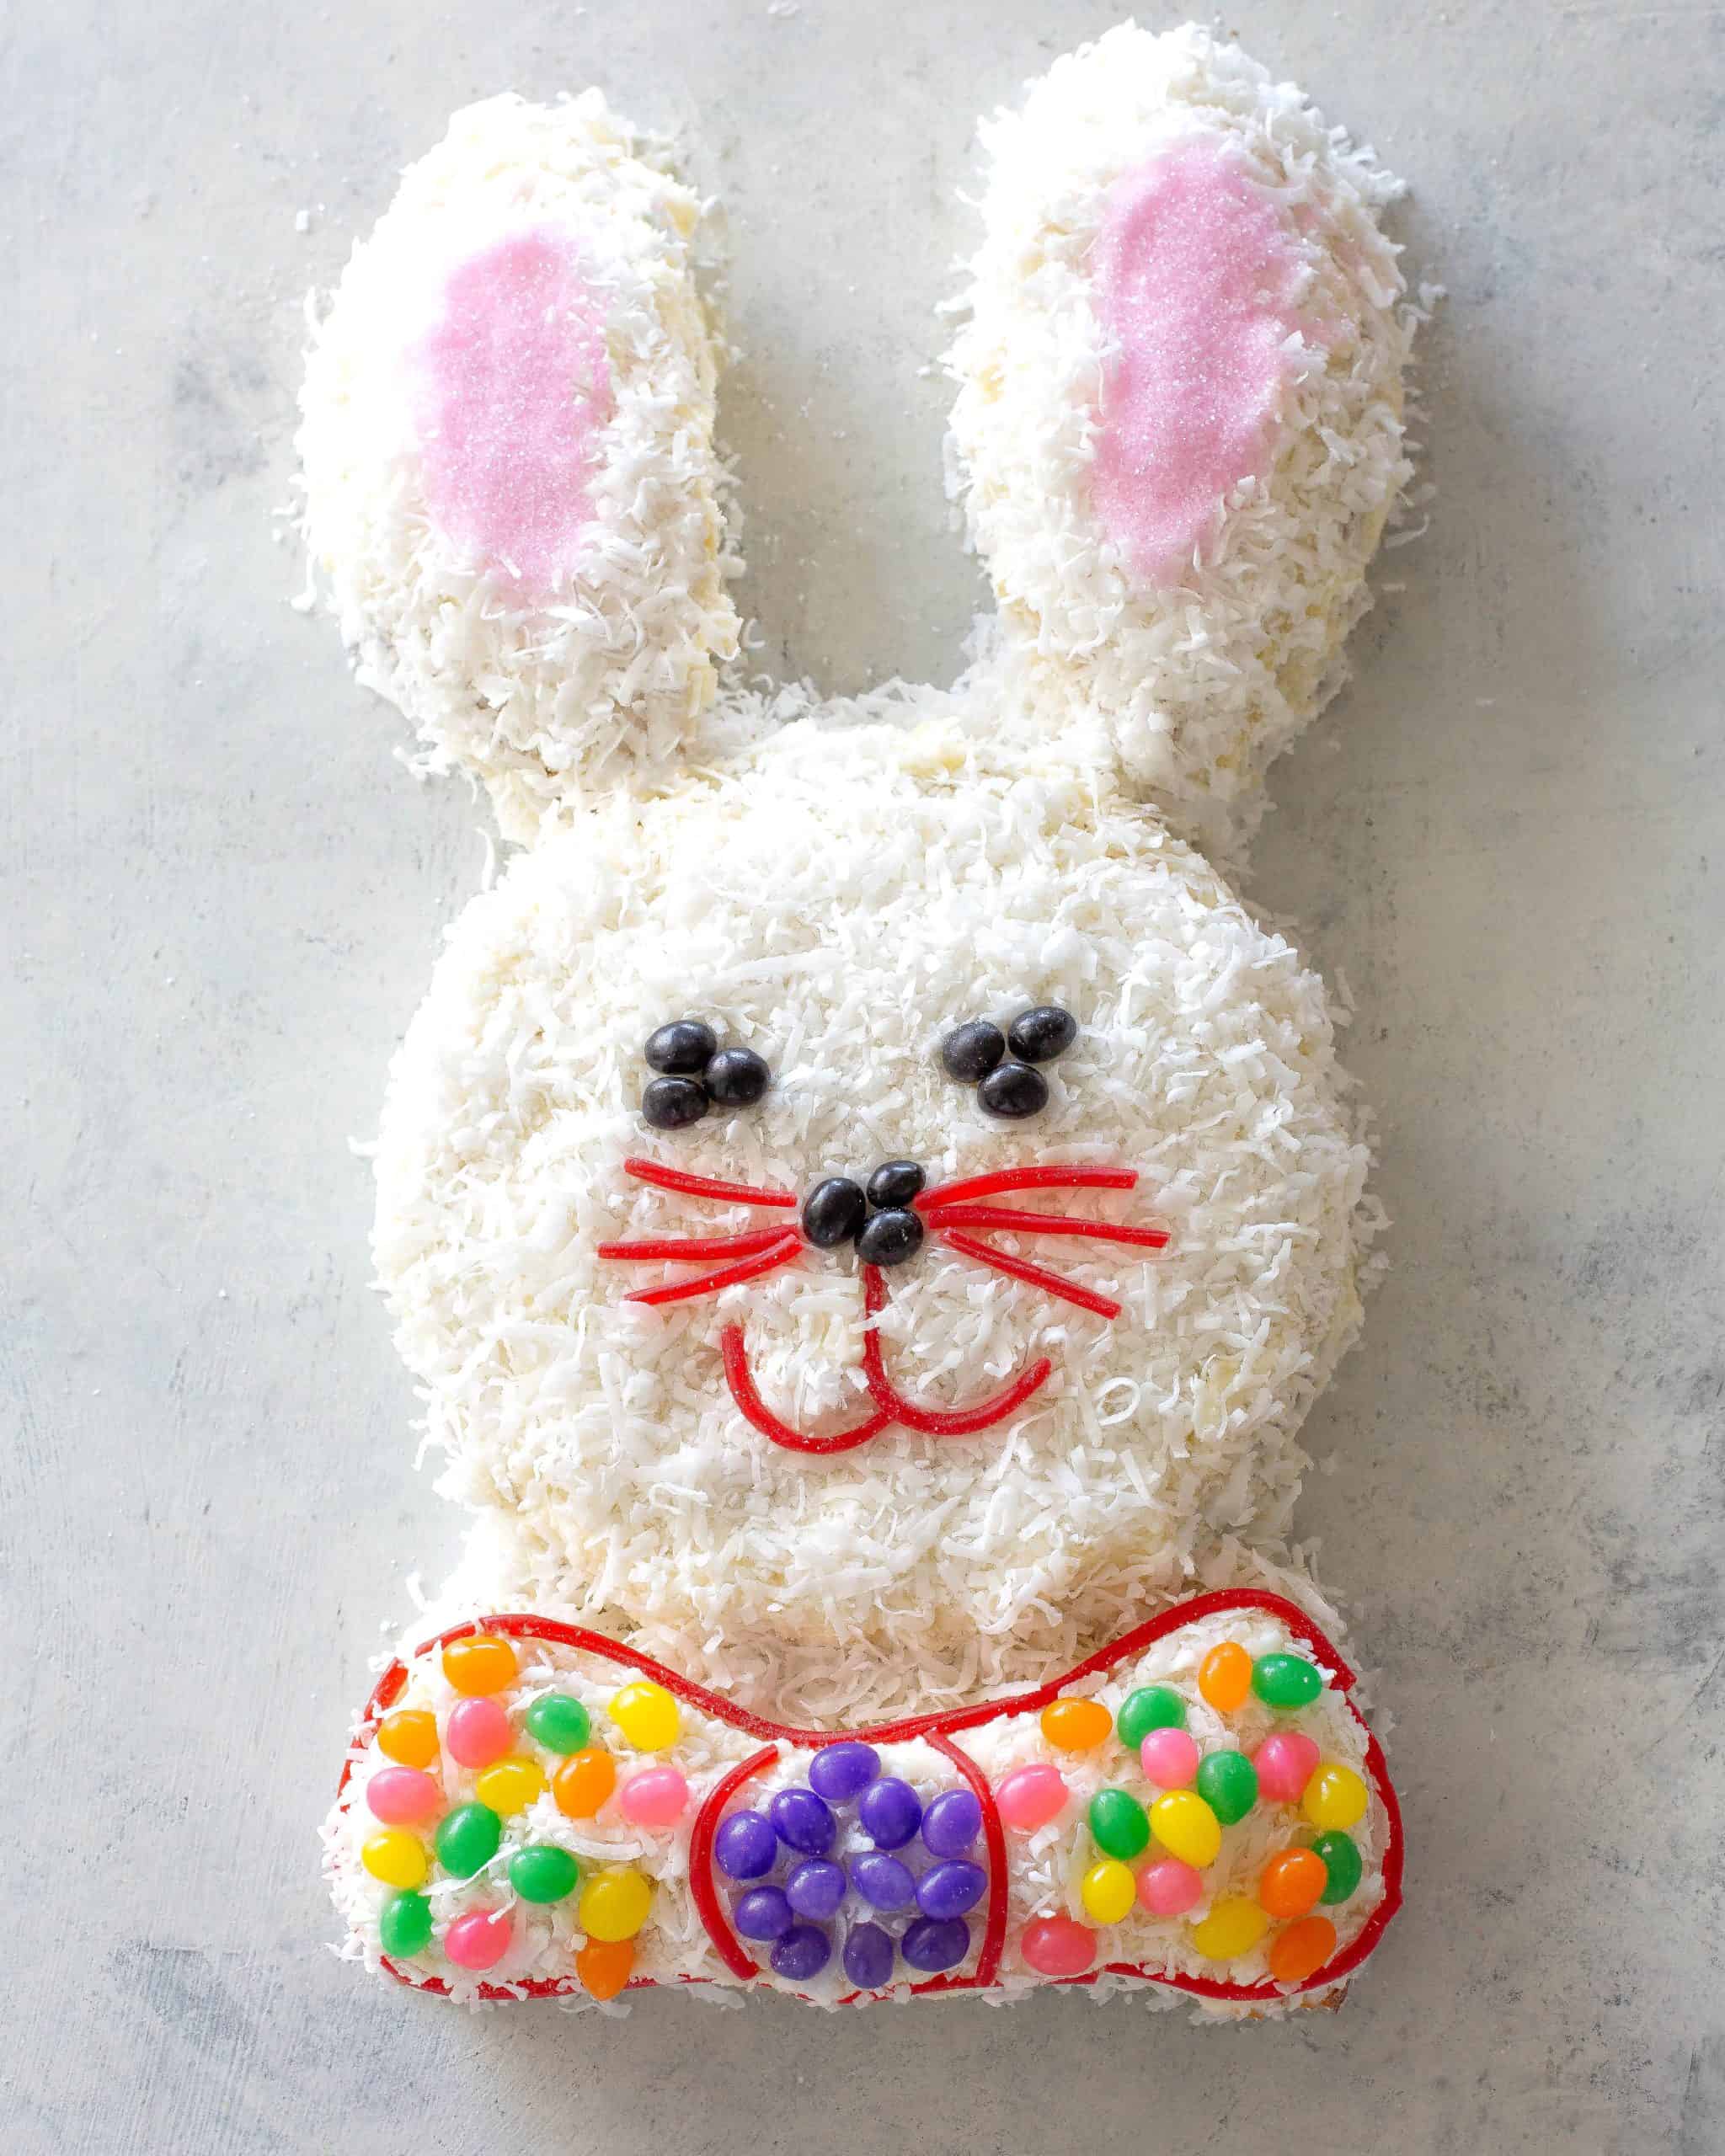 HERSHEY'S Perfectly Chocolate Easter Bunny Cake Recipe | Hersheyland